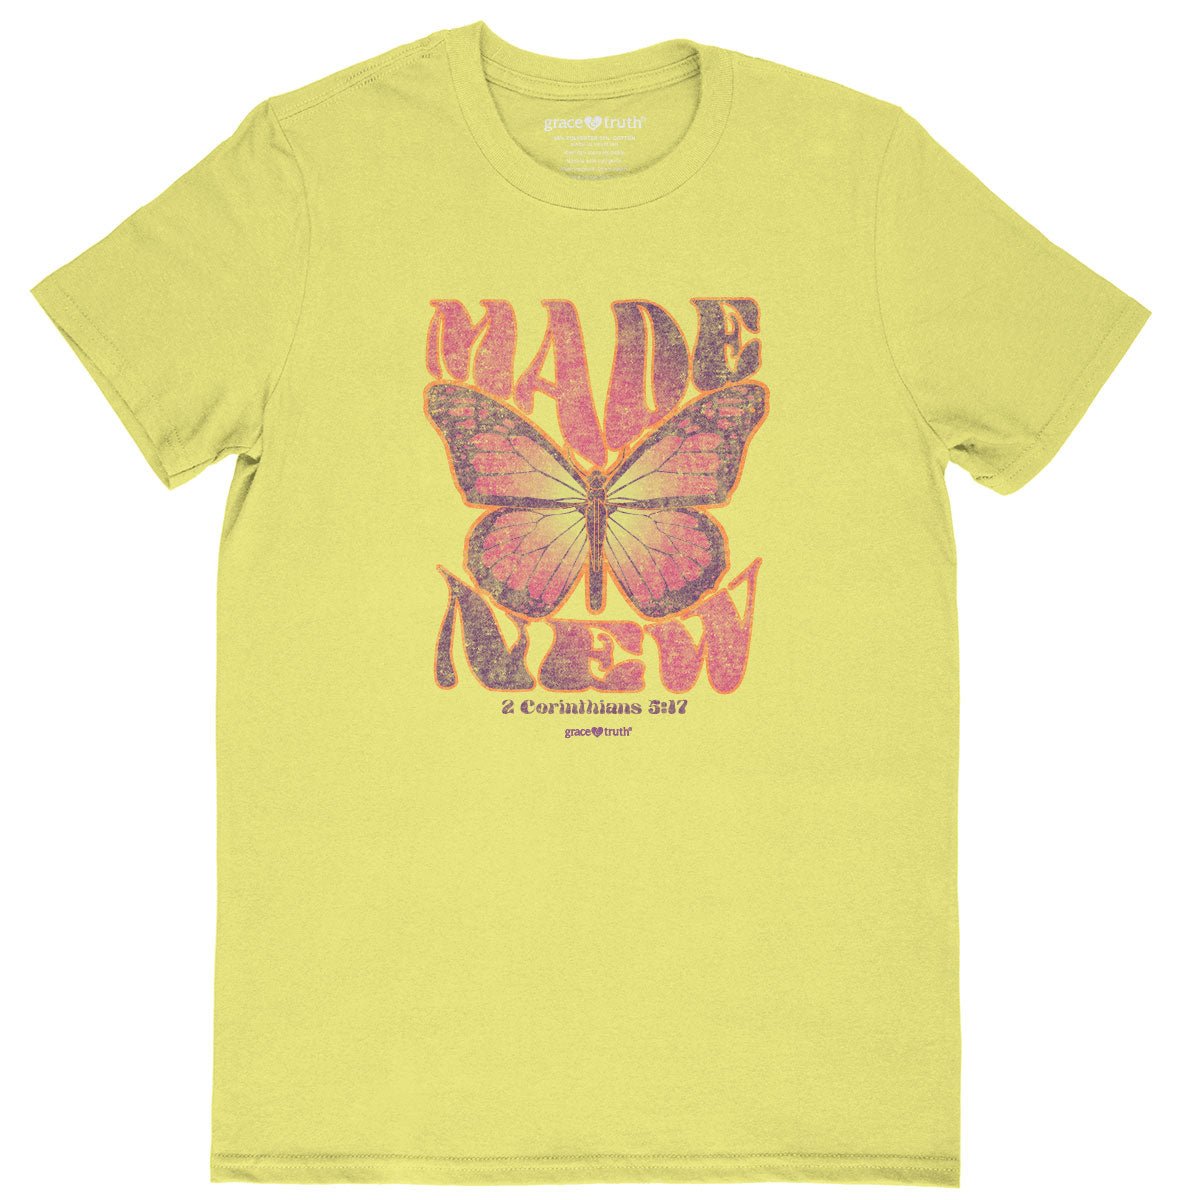 grace & truth Womens T-Shirt Made New Butterfly | 2FruitBearers